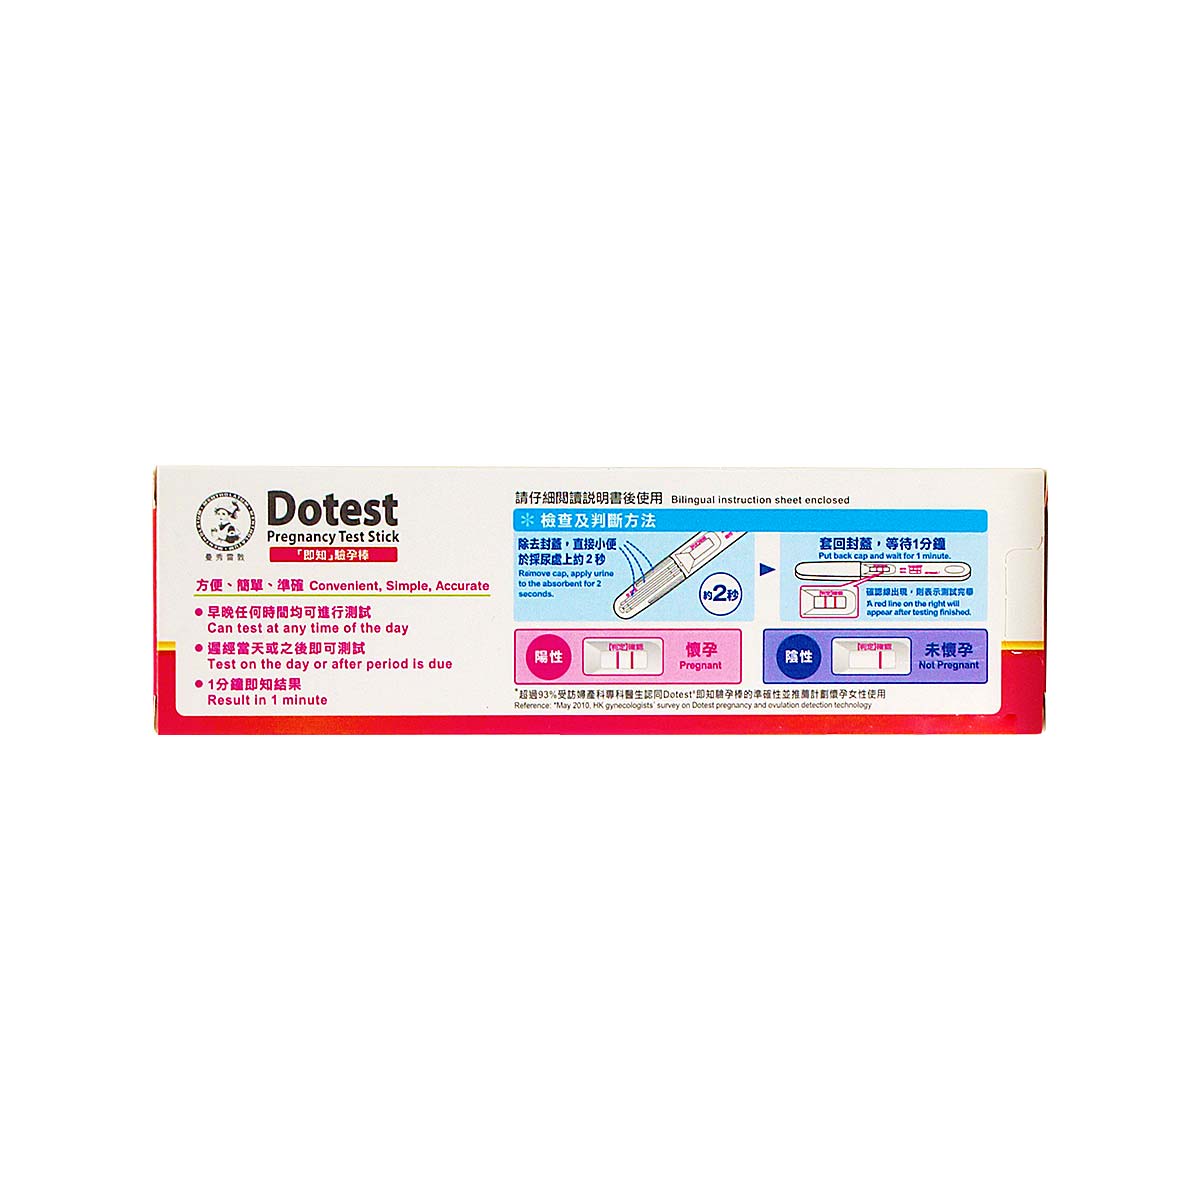 Mentholatum dotest One Step Pregnancy Test Stick-p_3